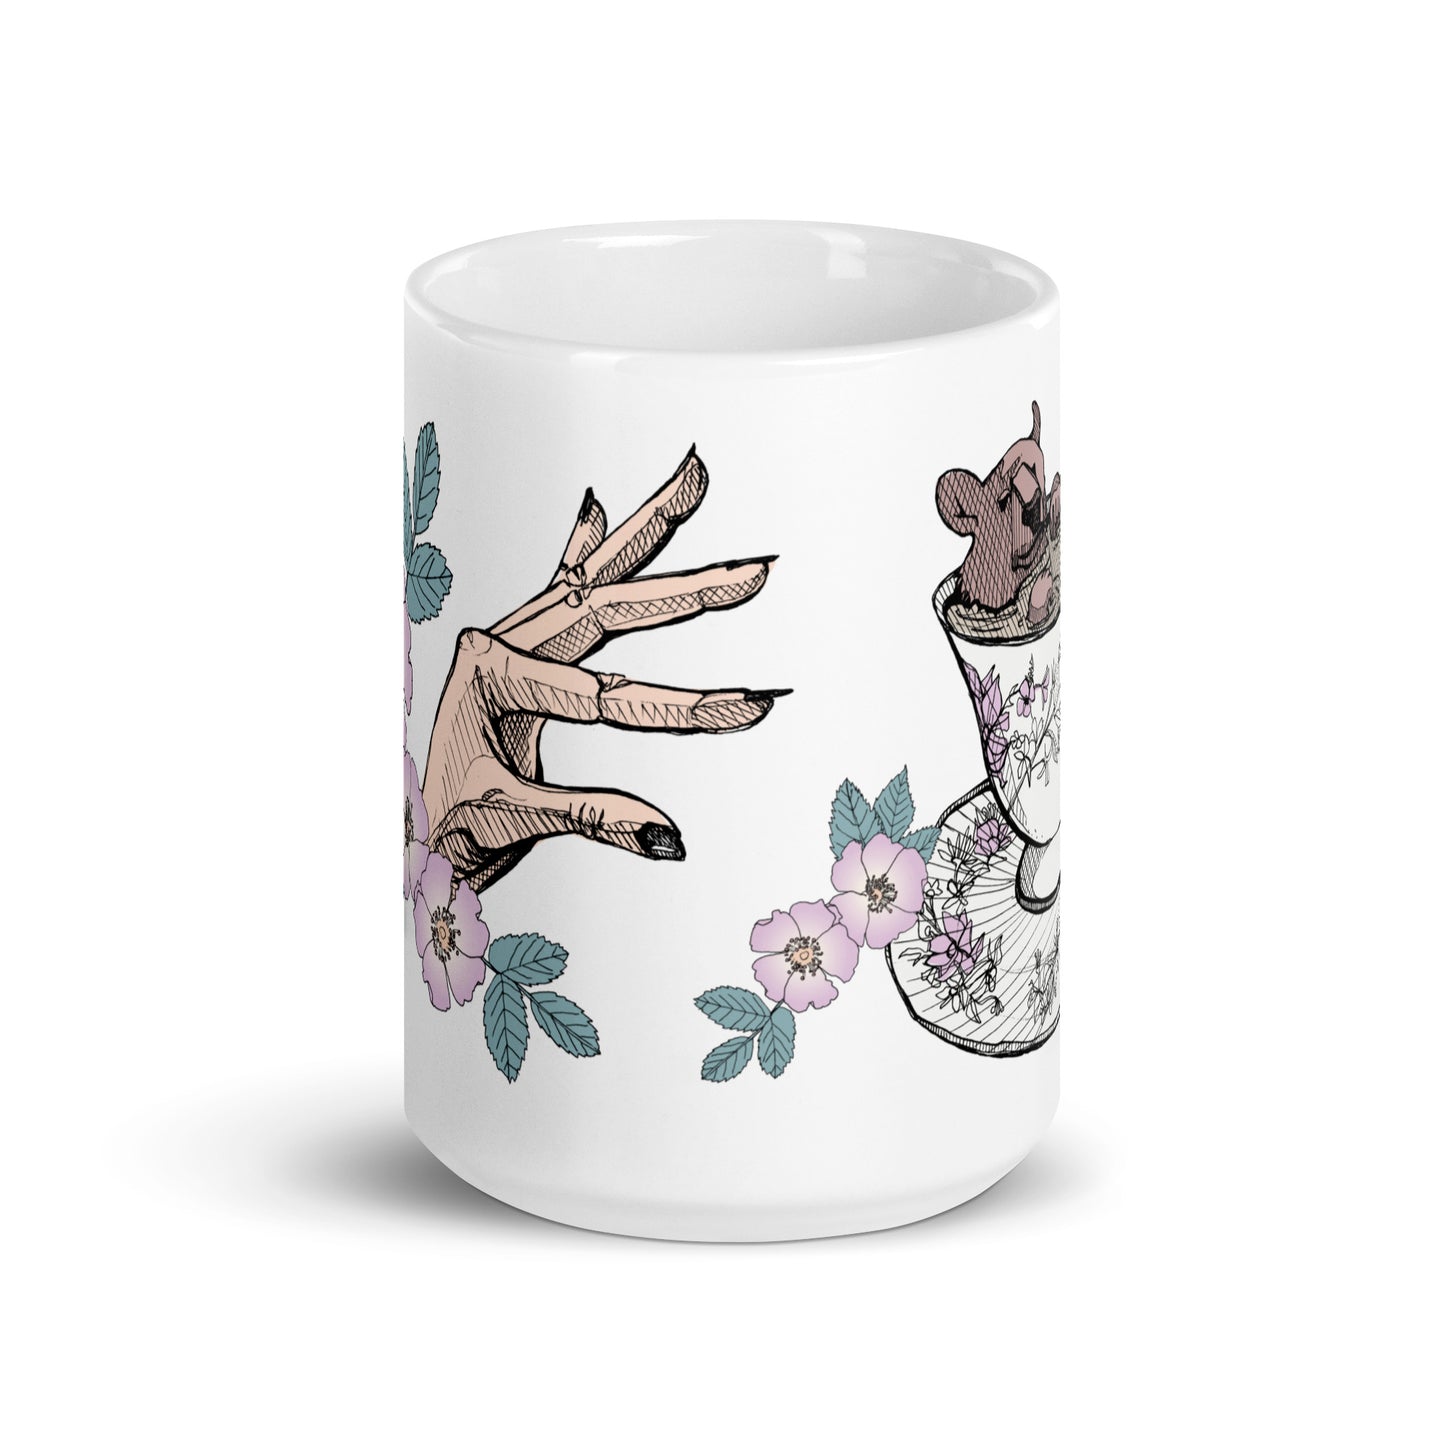 Bear in Teacup White Glossy Mug